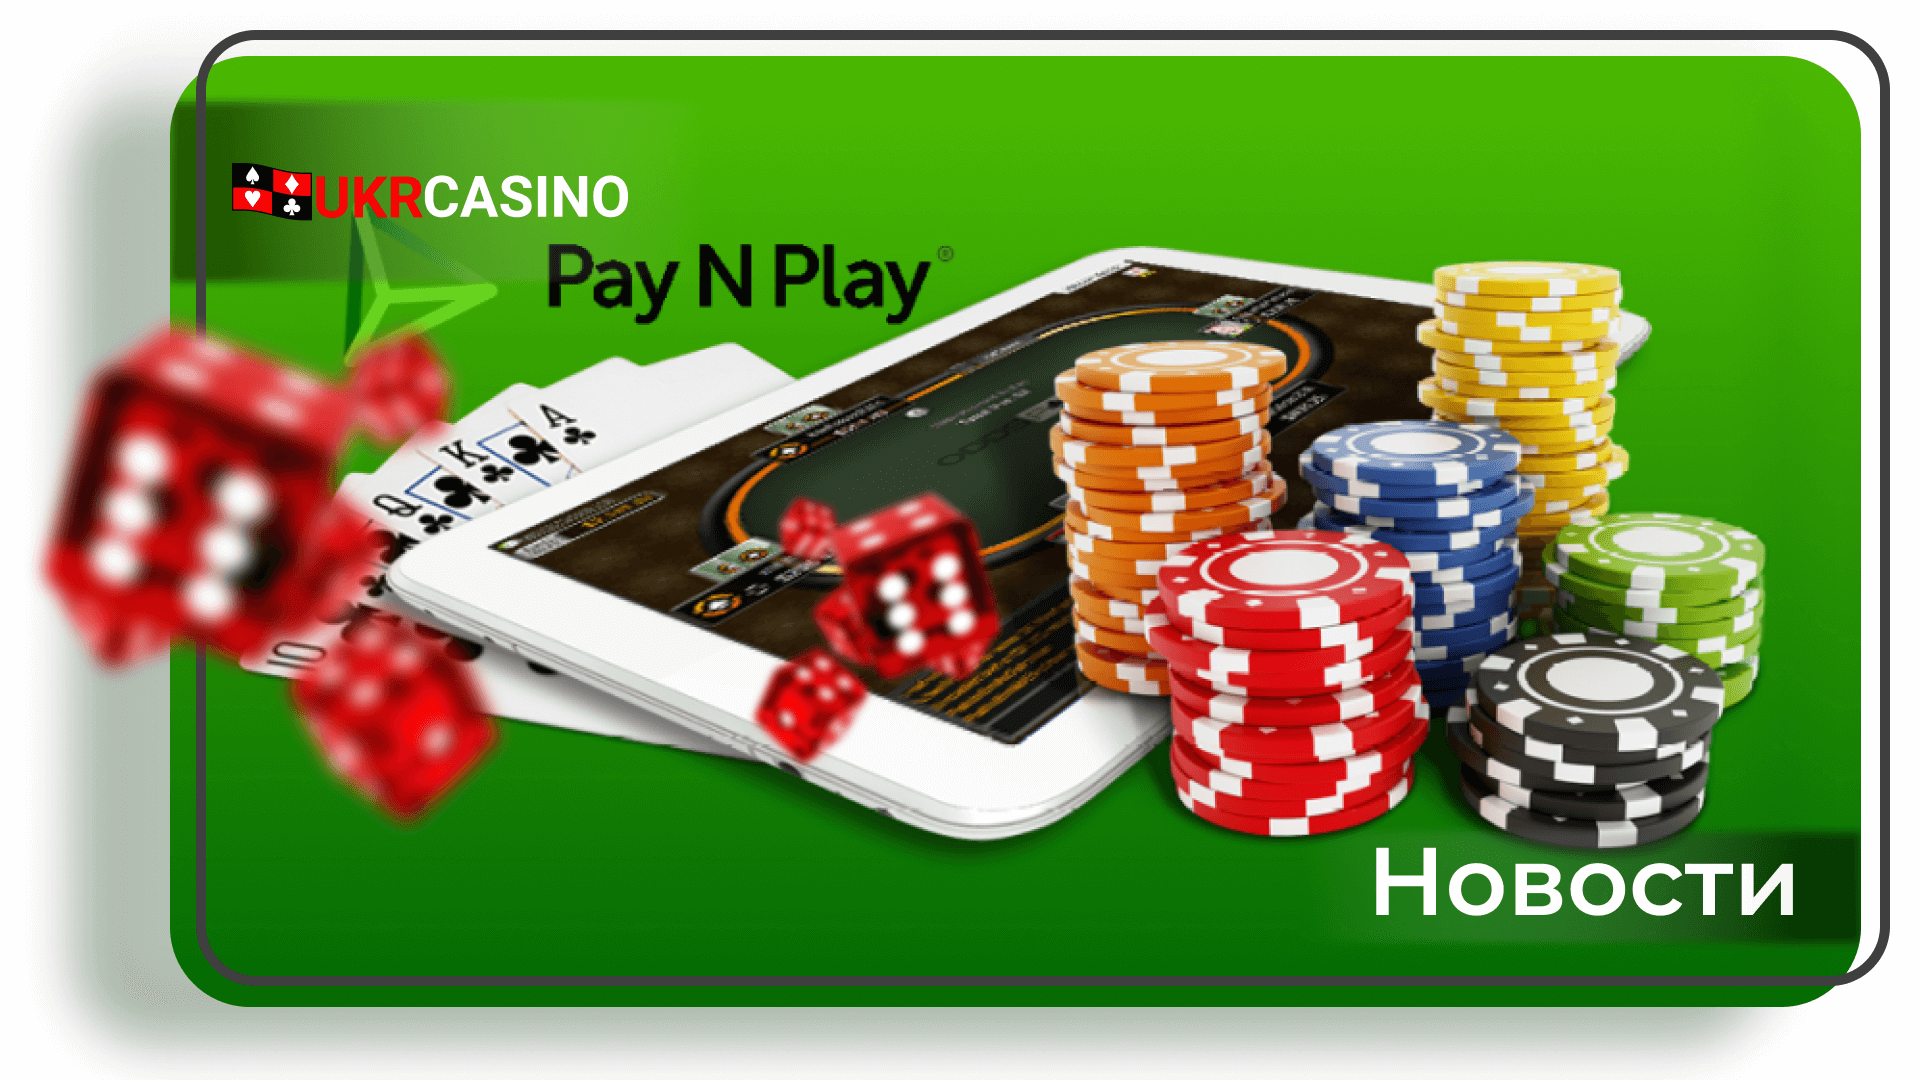 Что такое онлайн-казино Pay N Play?